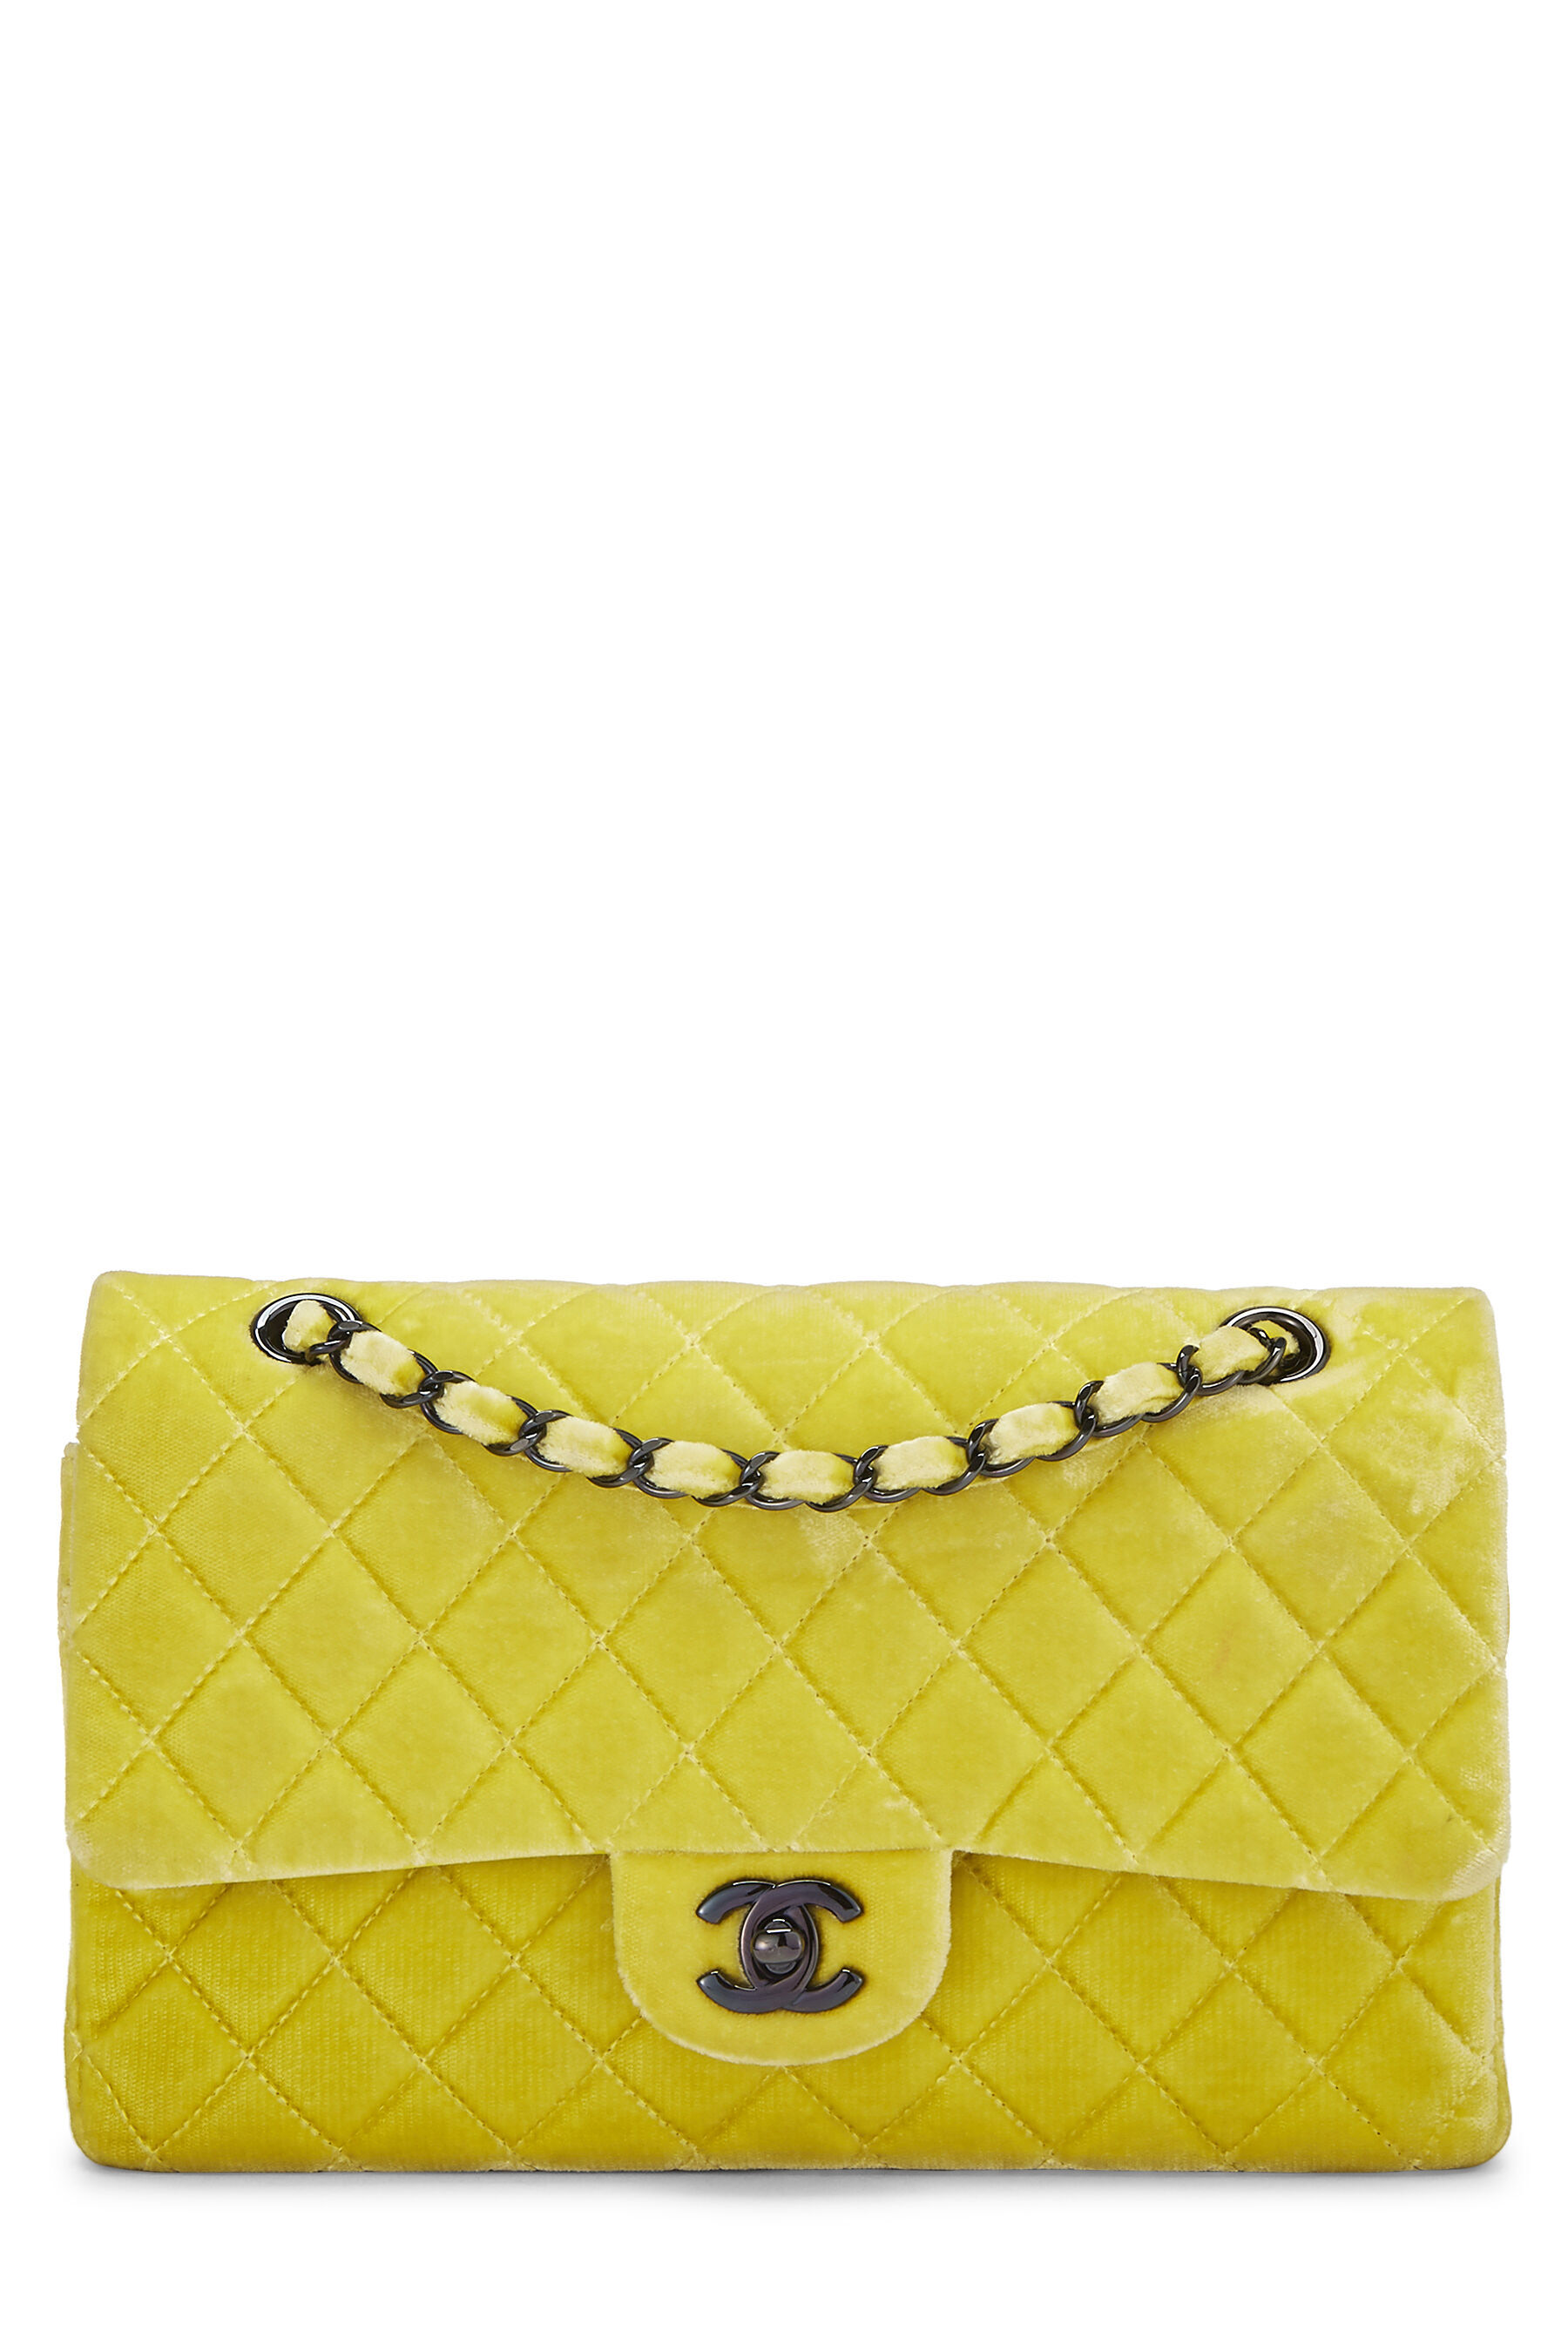 Chanel Yellow Caviar Medium Double Flap Bag Light Gold Hardware  Madison  Avenue Couture